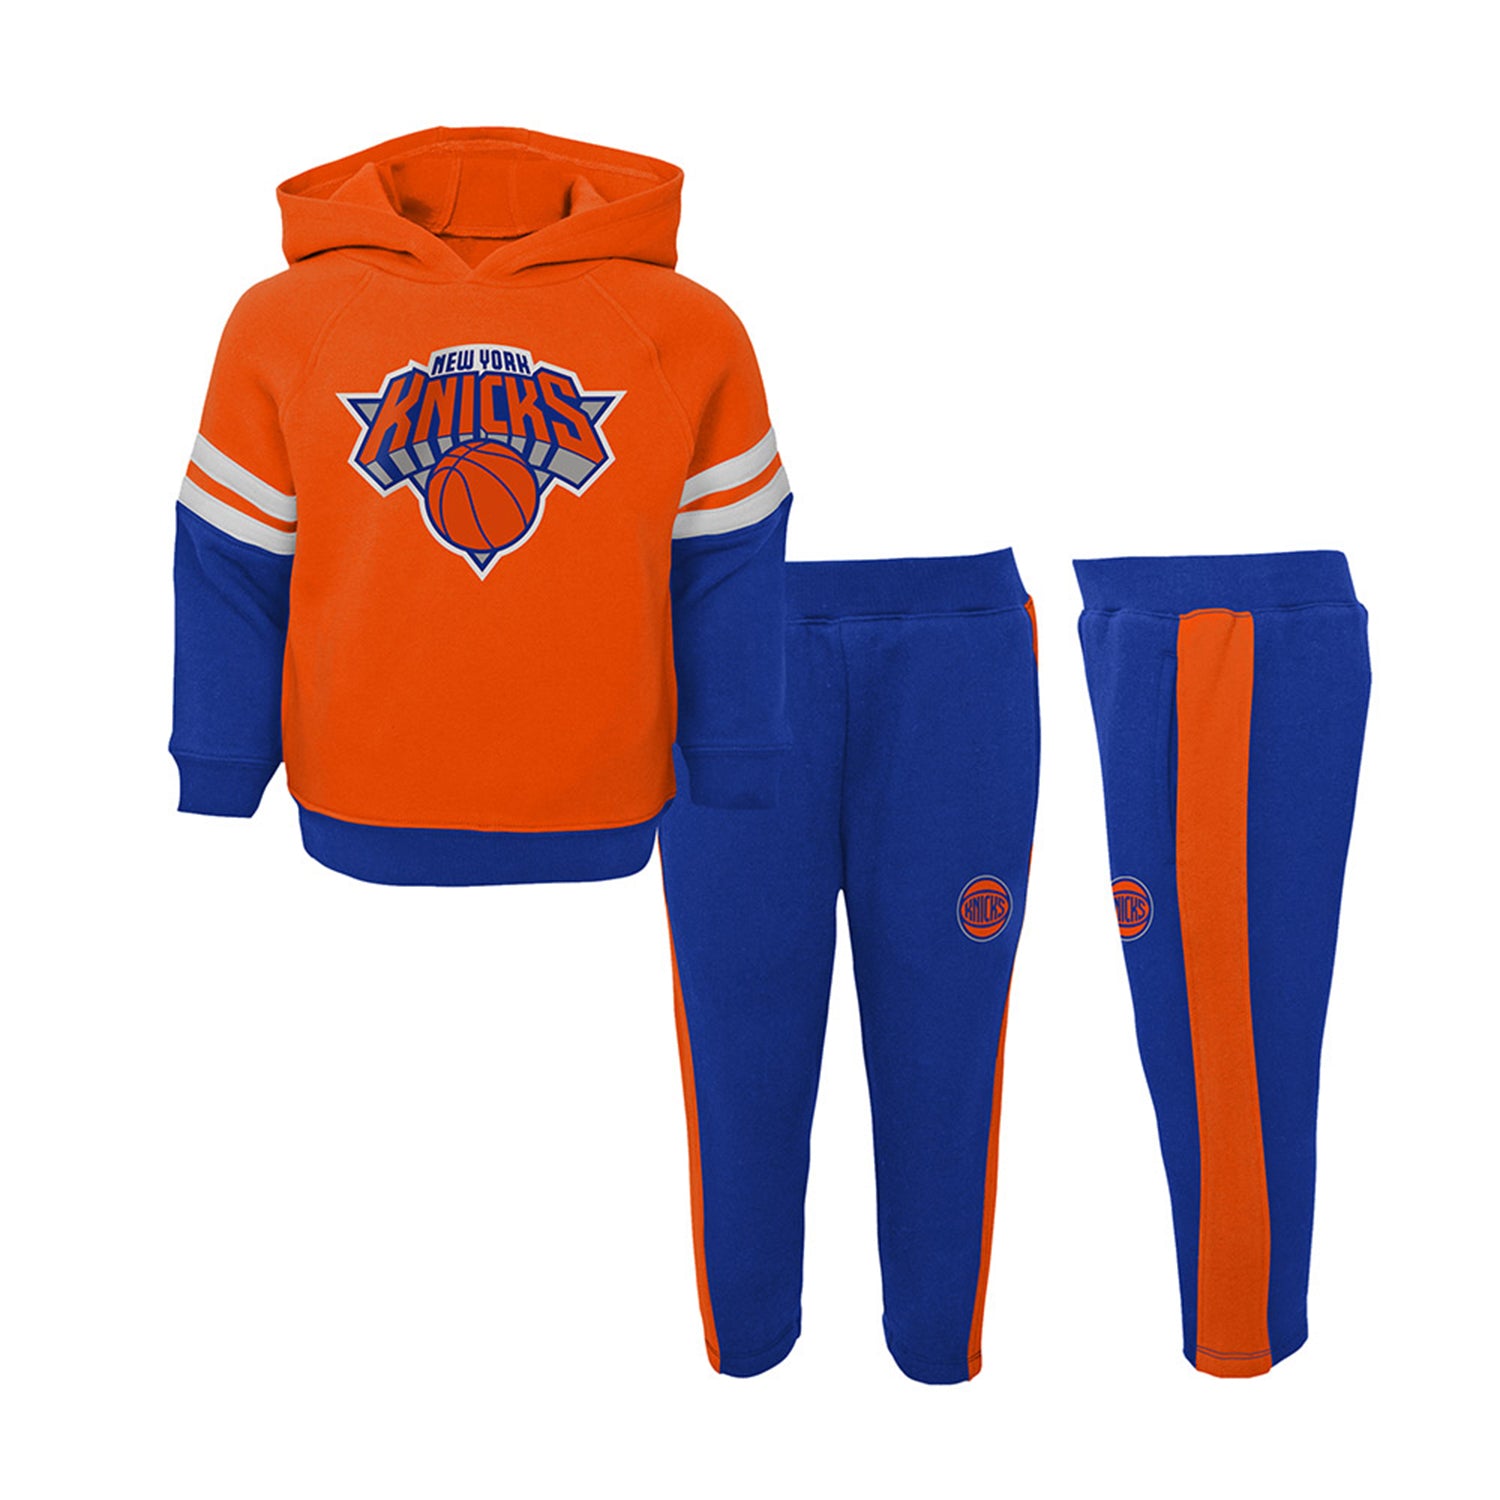 New York Knicks x M&M's - COP OR DROP? / Collab with @arisolomondesign /  @nyknicks /…